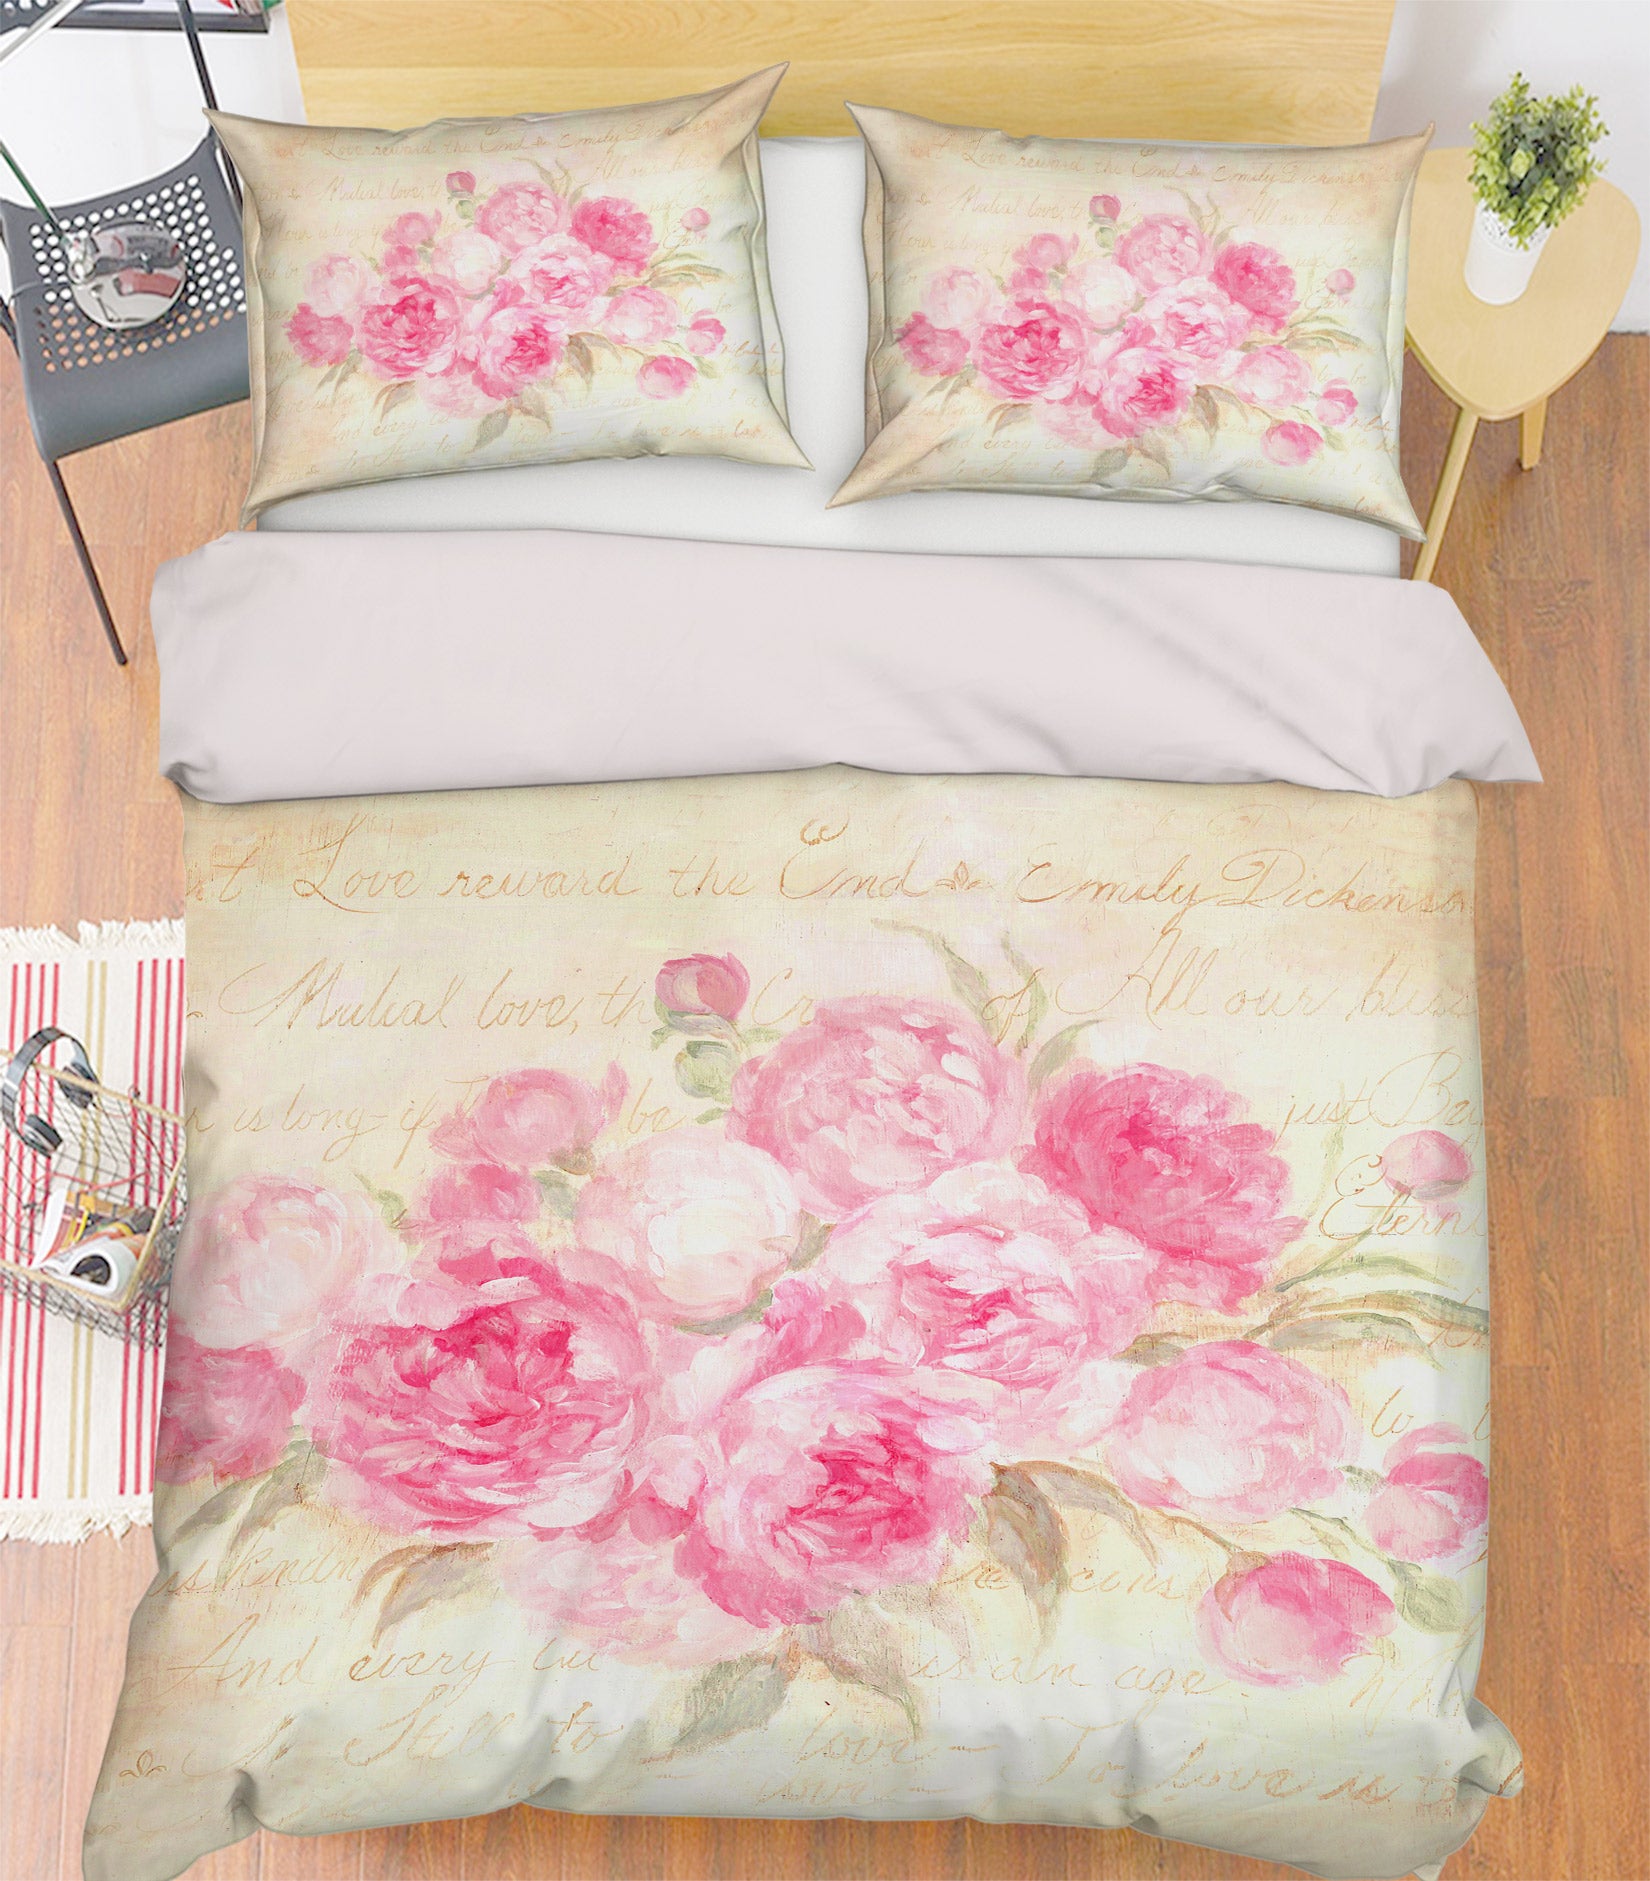 3D Pink Flower Bush 2120 Debi Coules Bedding Bed Pillowcases Quilt